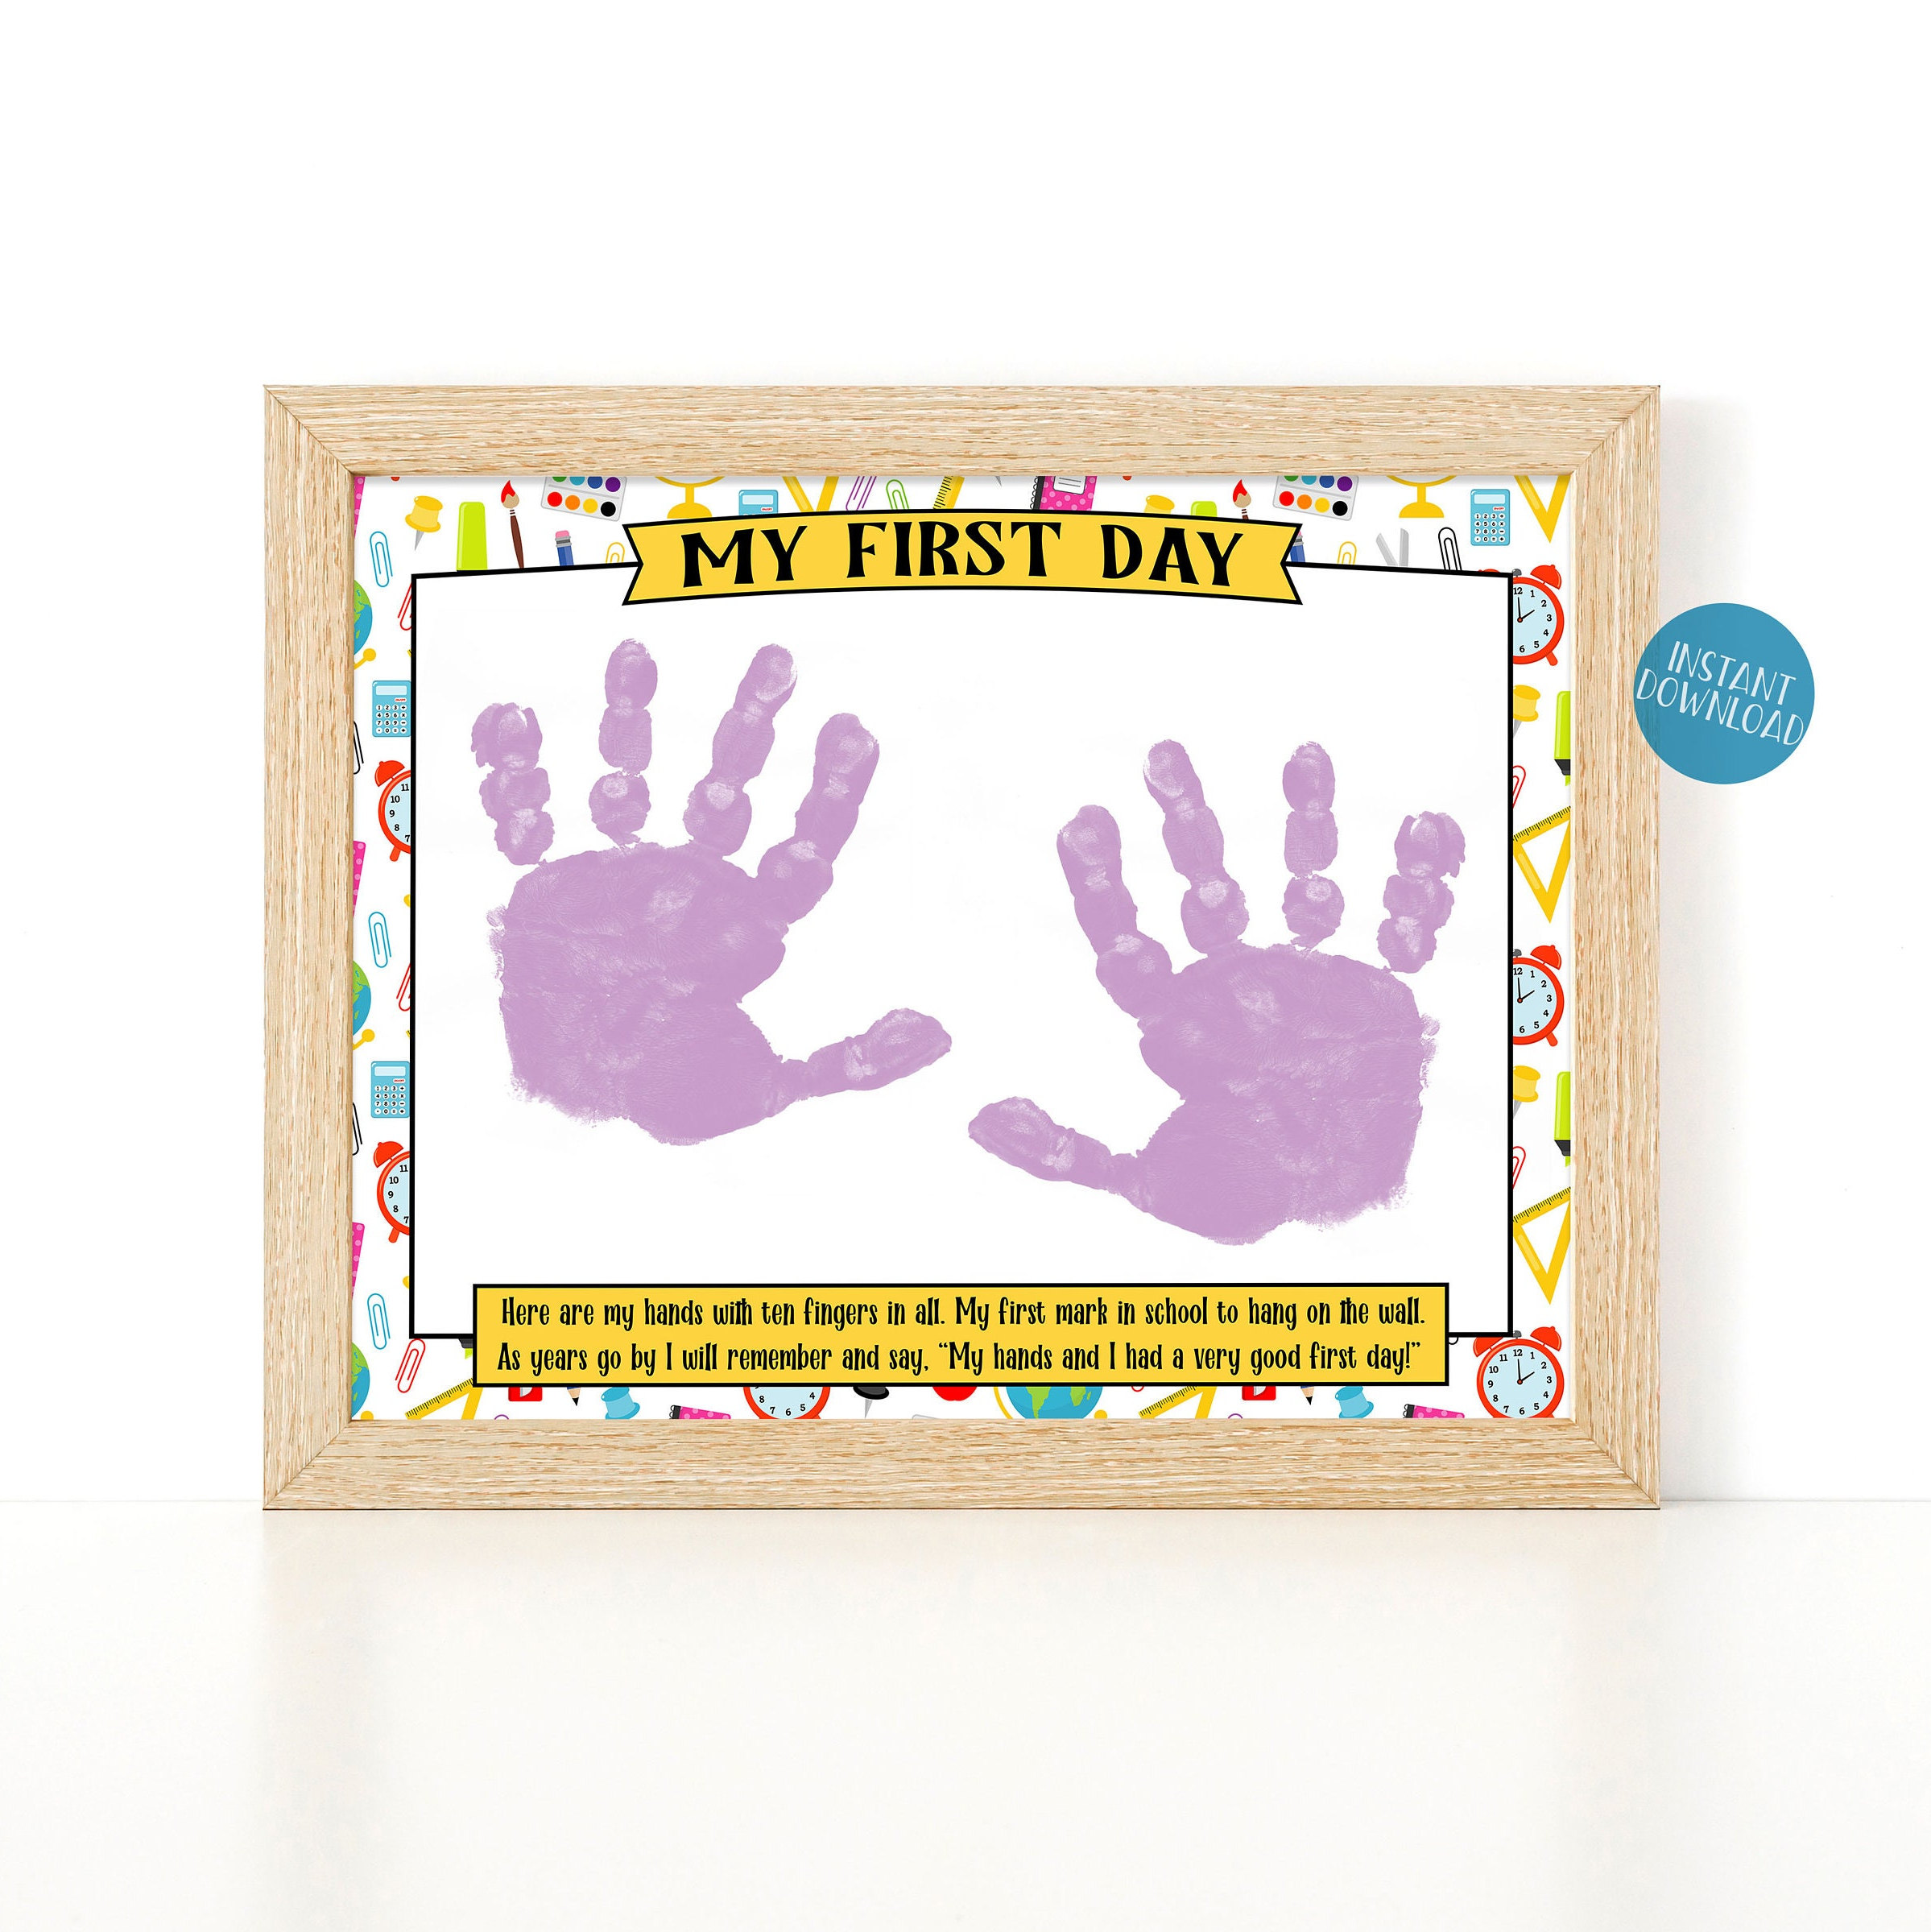 53 Fun Handprint Crafts For Kids [Free Templates]